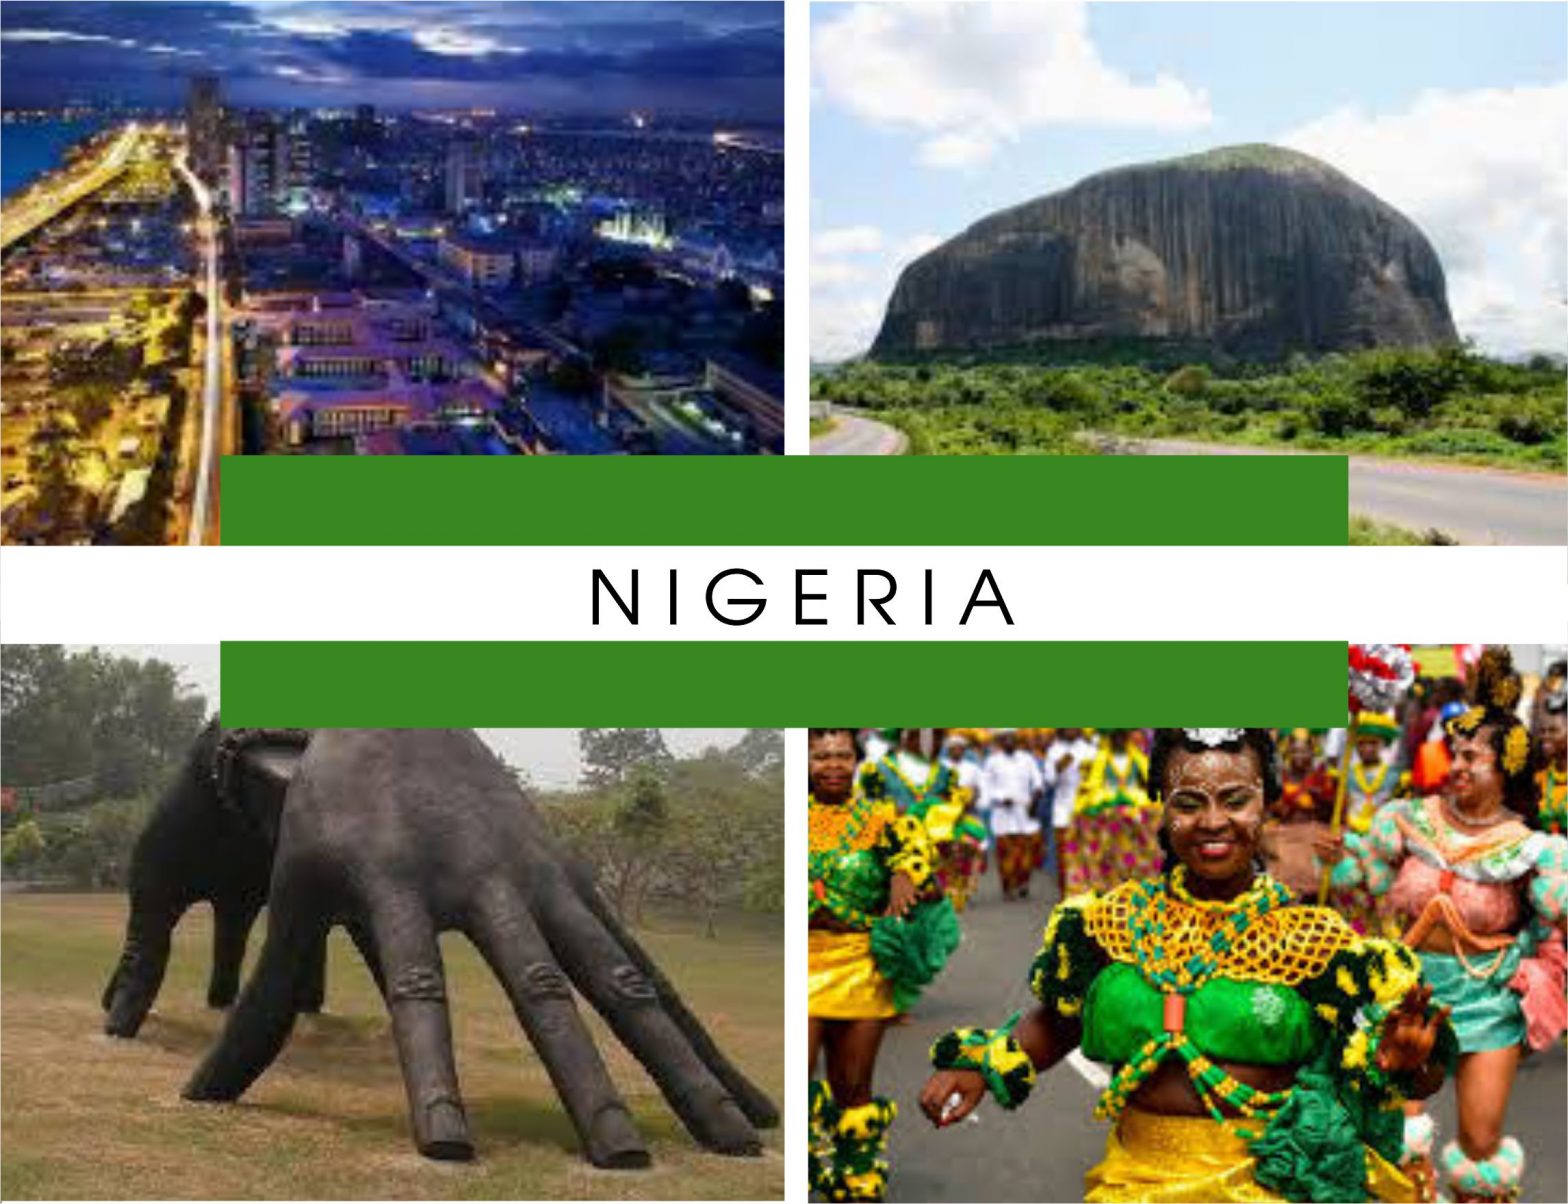 PLACES TO VISIT IN NIGERIA